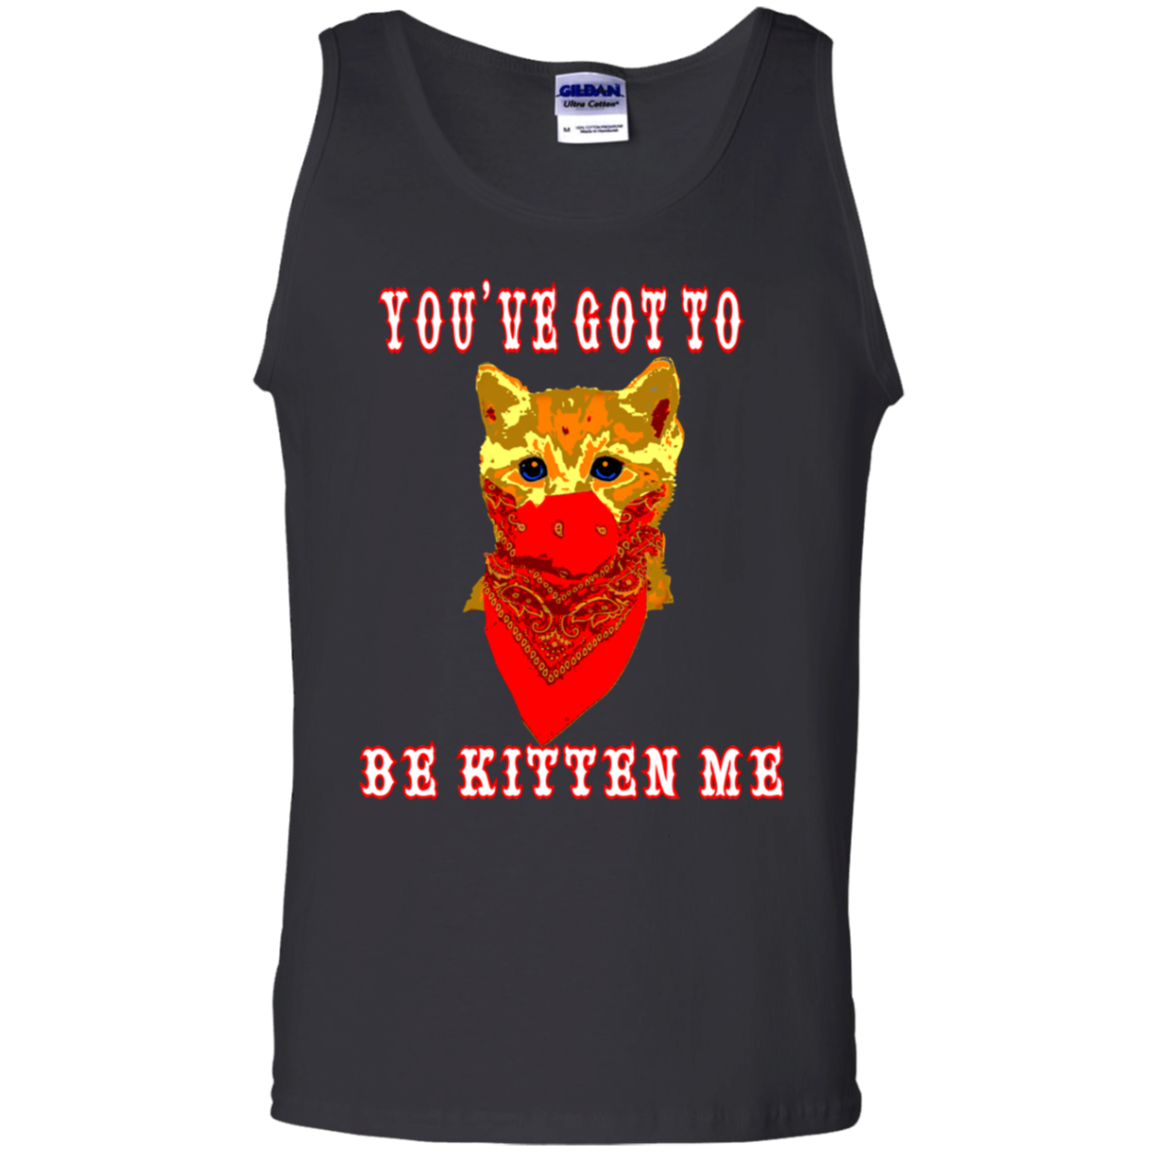 ArtichokeUSA Custom Design. You've Got To Be Kitten Me?! 2020, Not What We Expected. 100% Cotton Tank Top